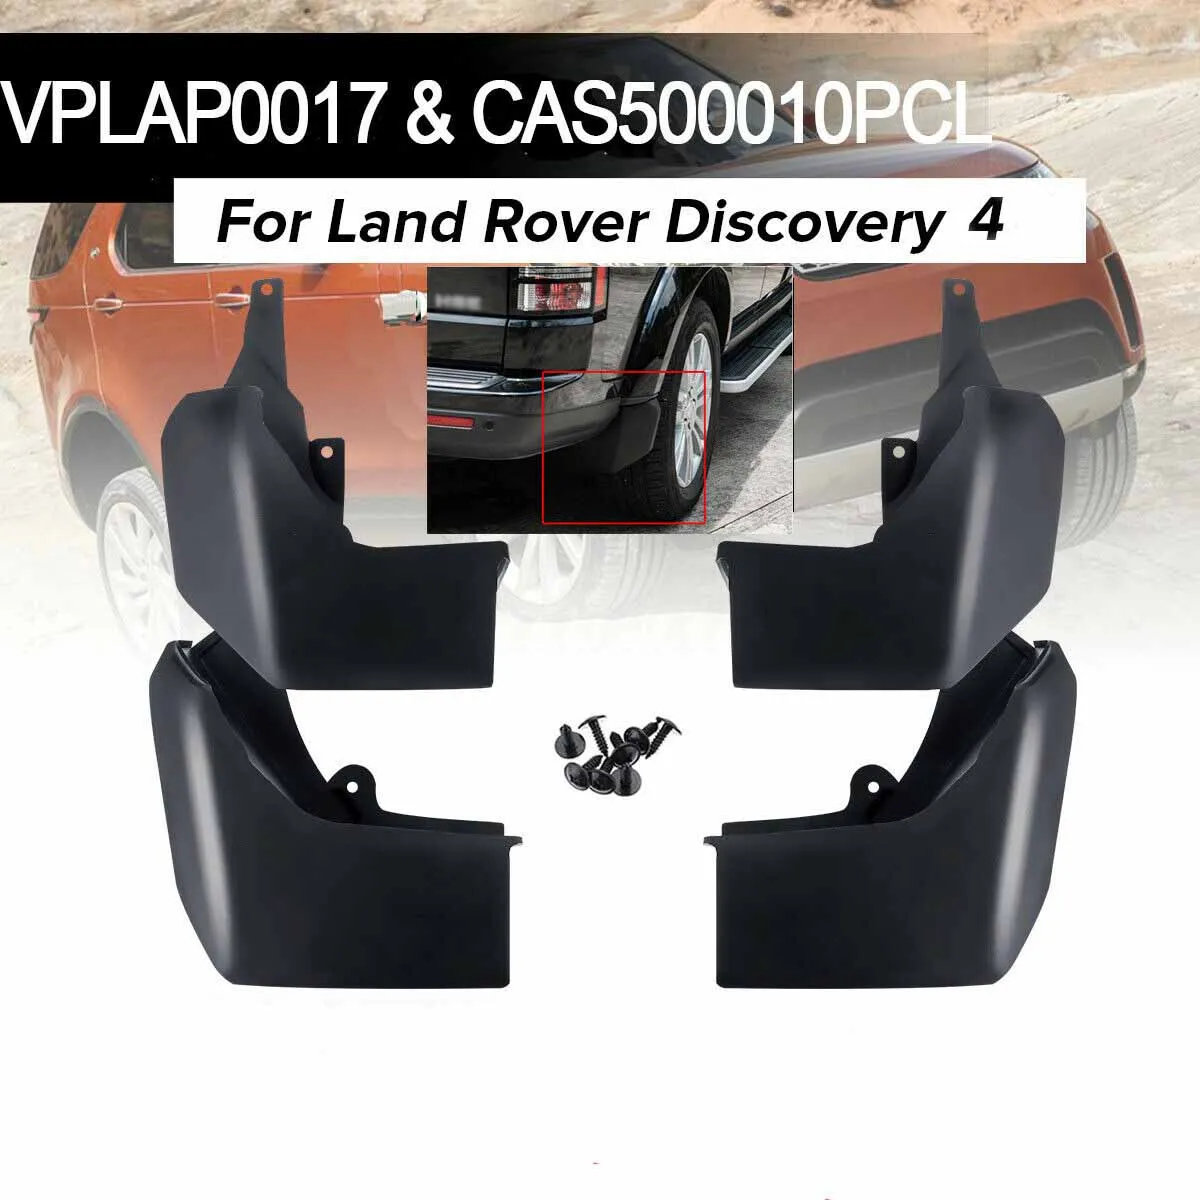 

Автомобильные Брызговики для Land Rover Discovery 3 4 LR3 LR4 2010-2019, брызговики CAS500010PCL VPLAP0017